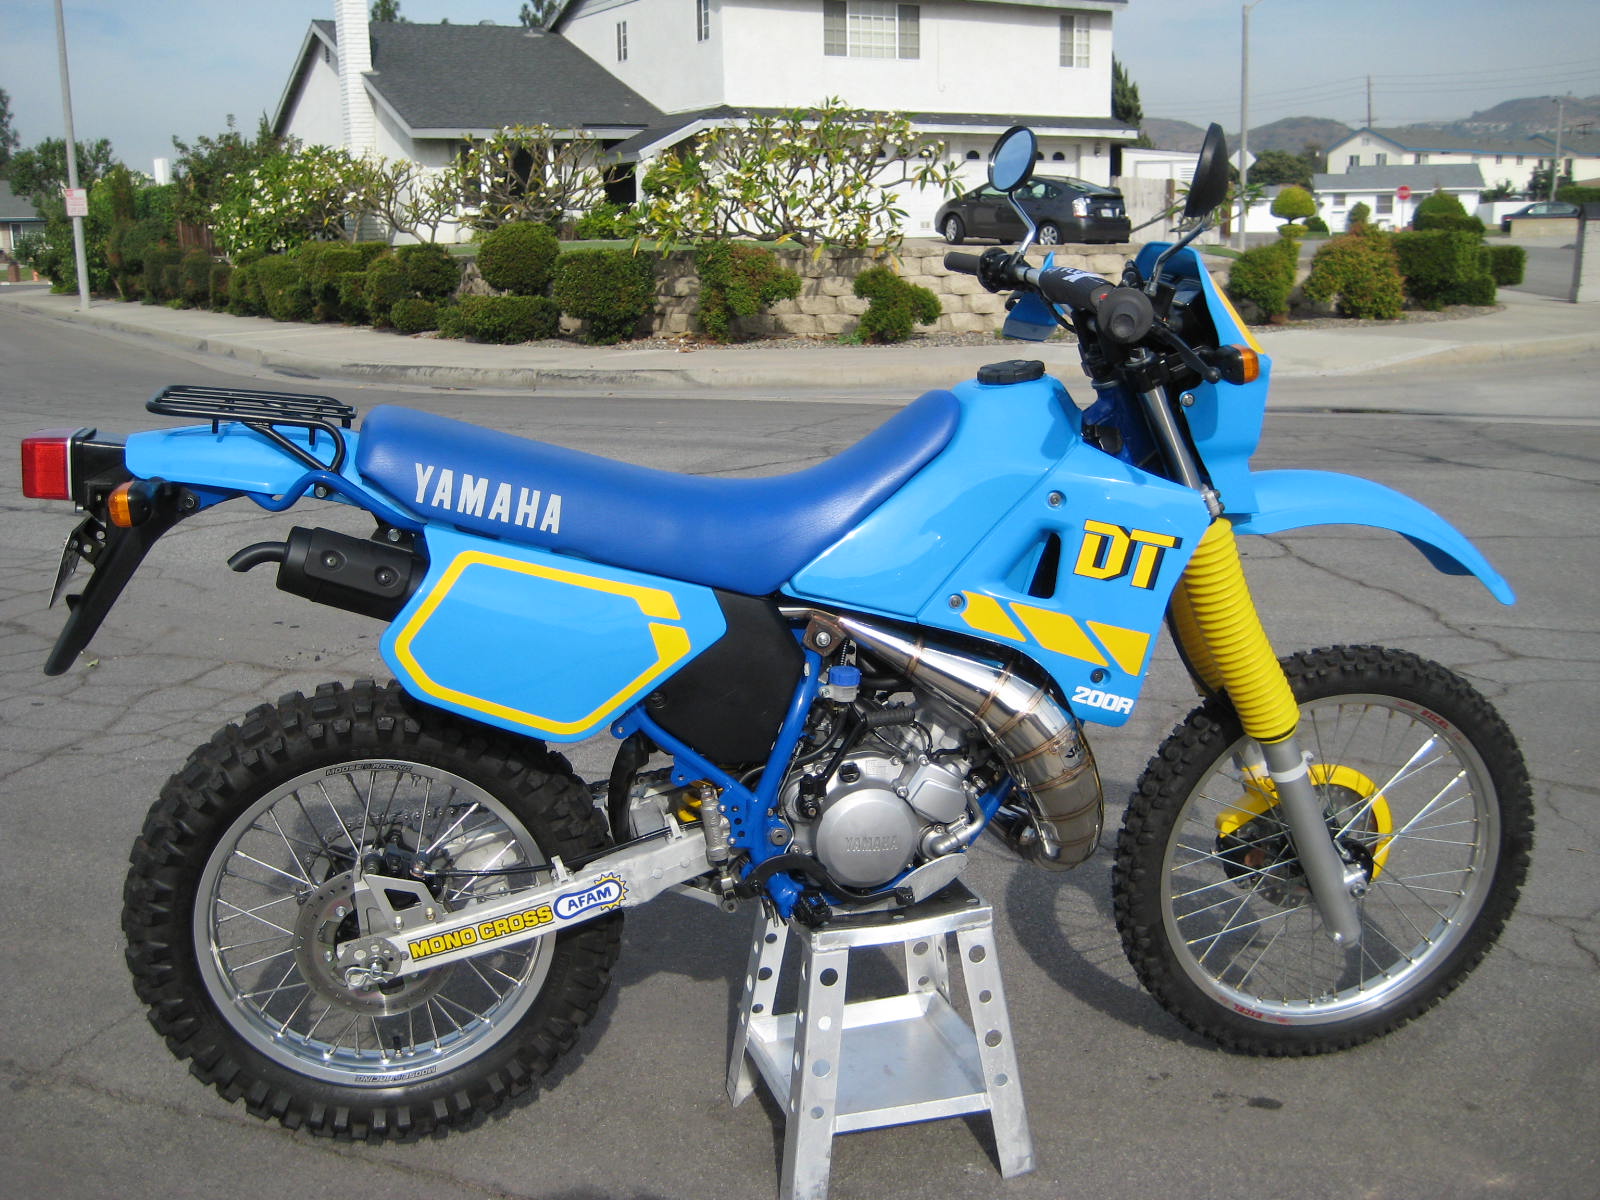 1991 Yamaha DT200R Photos, Informations, Articles - Bikes 